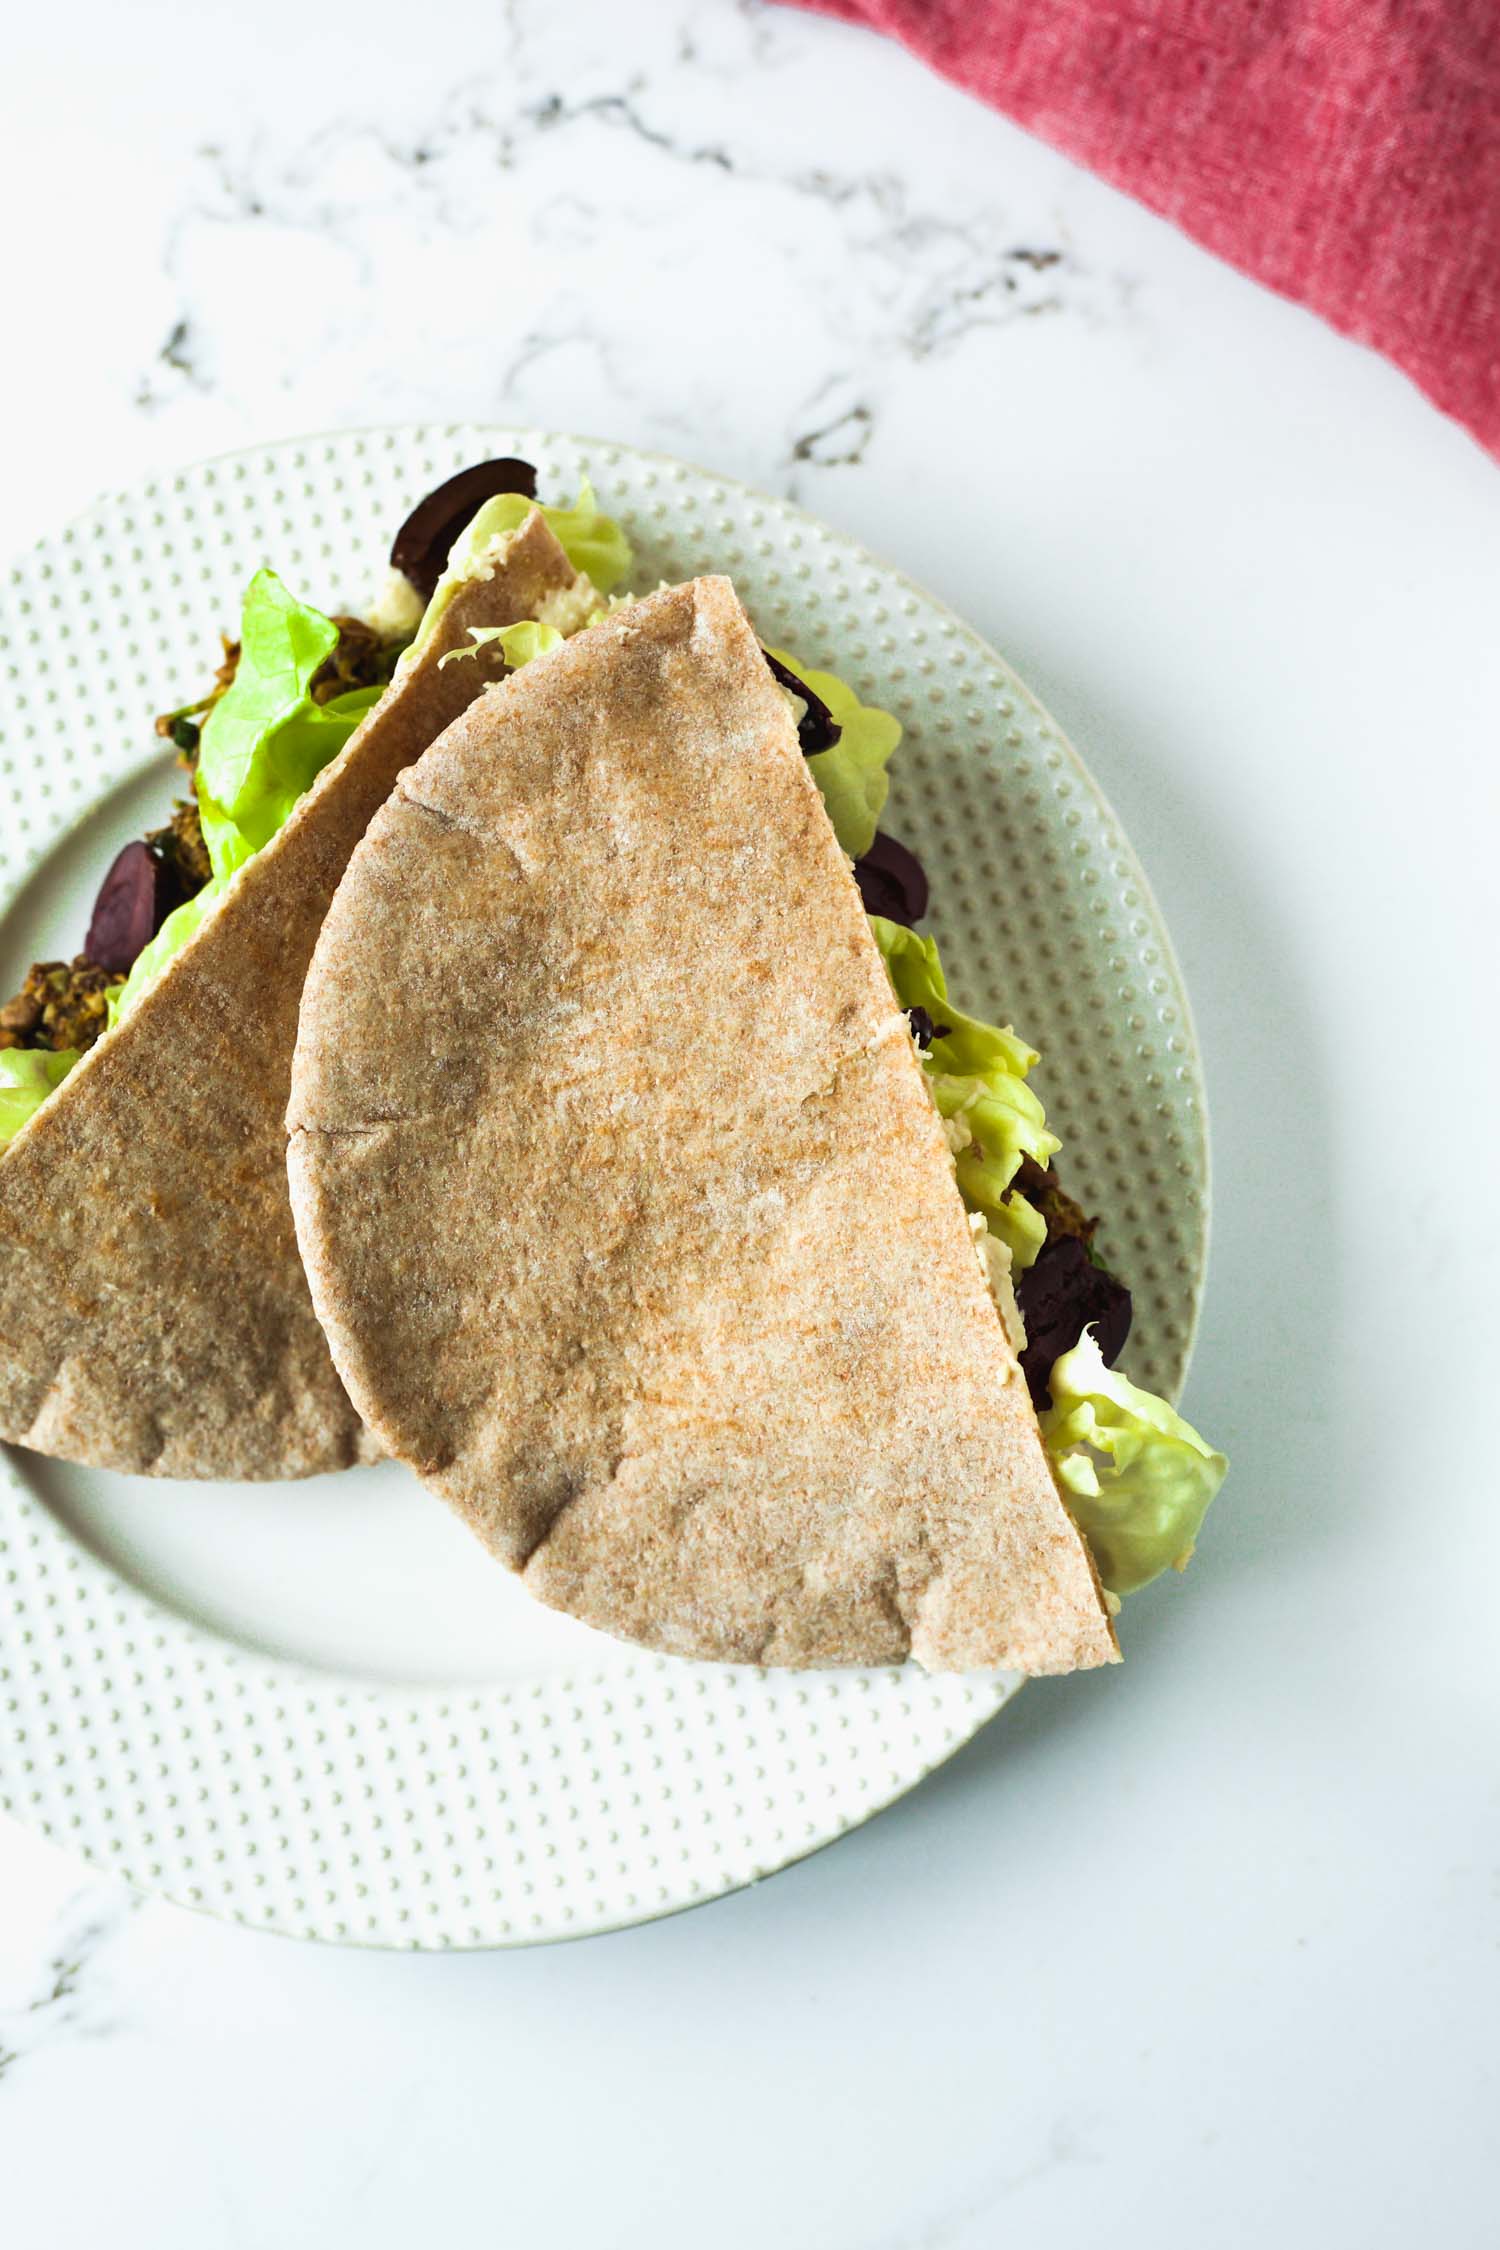 Baked Lentil Falafel Sandwich | Recipe from The Simply Vegan Cookbook by Dustin Harder